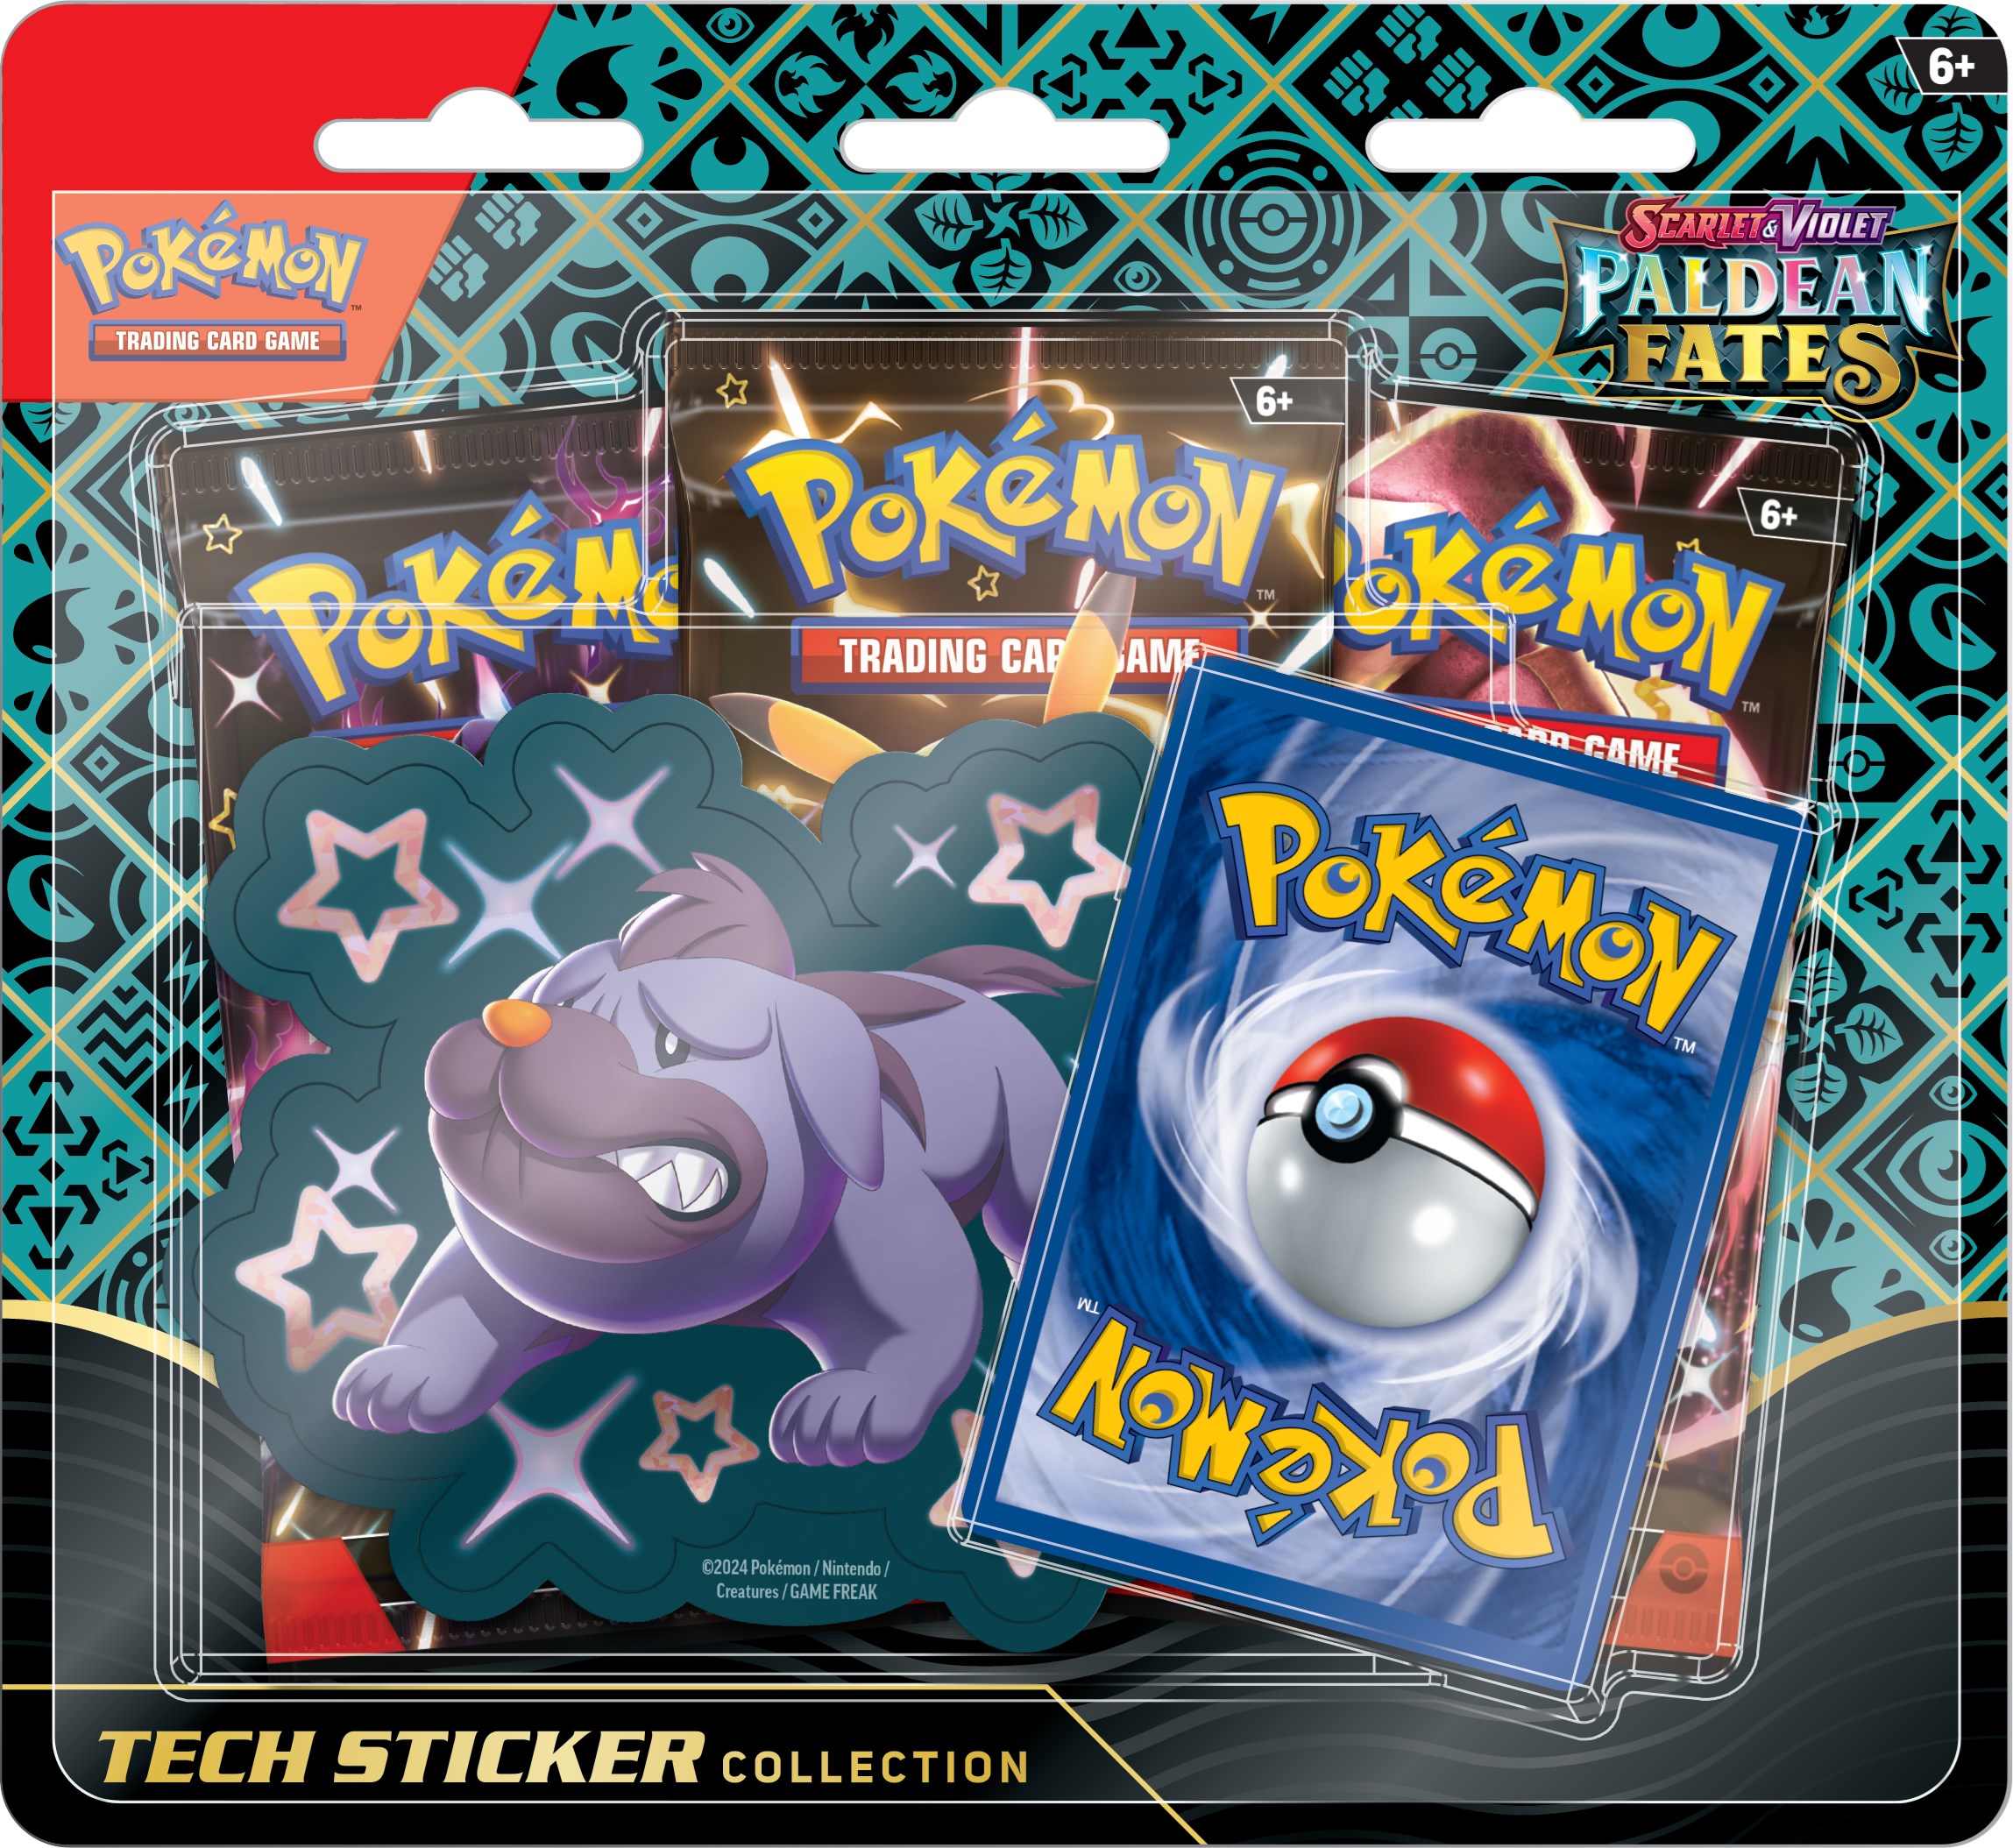 Pokémon TCG Violet Écarlate%E2%80%94Paldean Fates Tech Sticker Collection Maschiff png jpgcopy